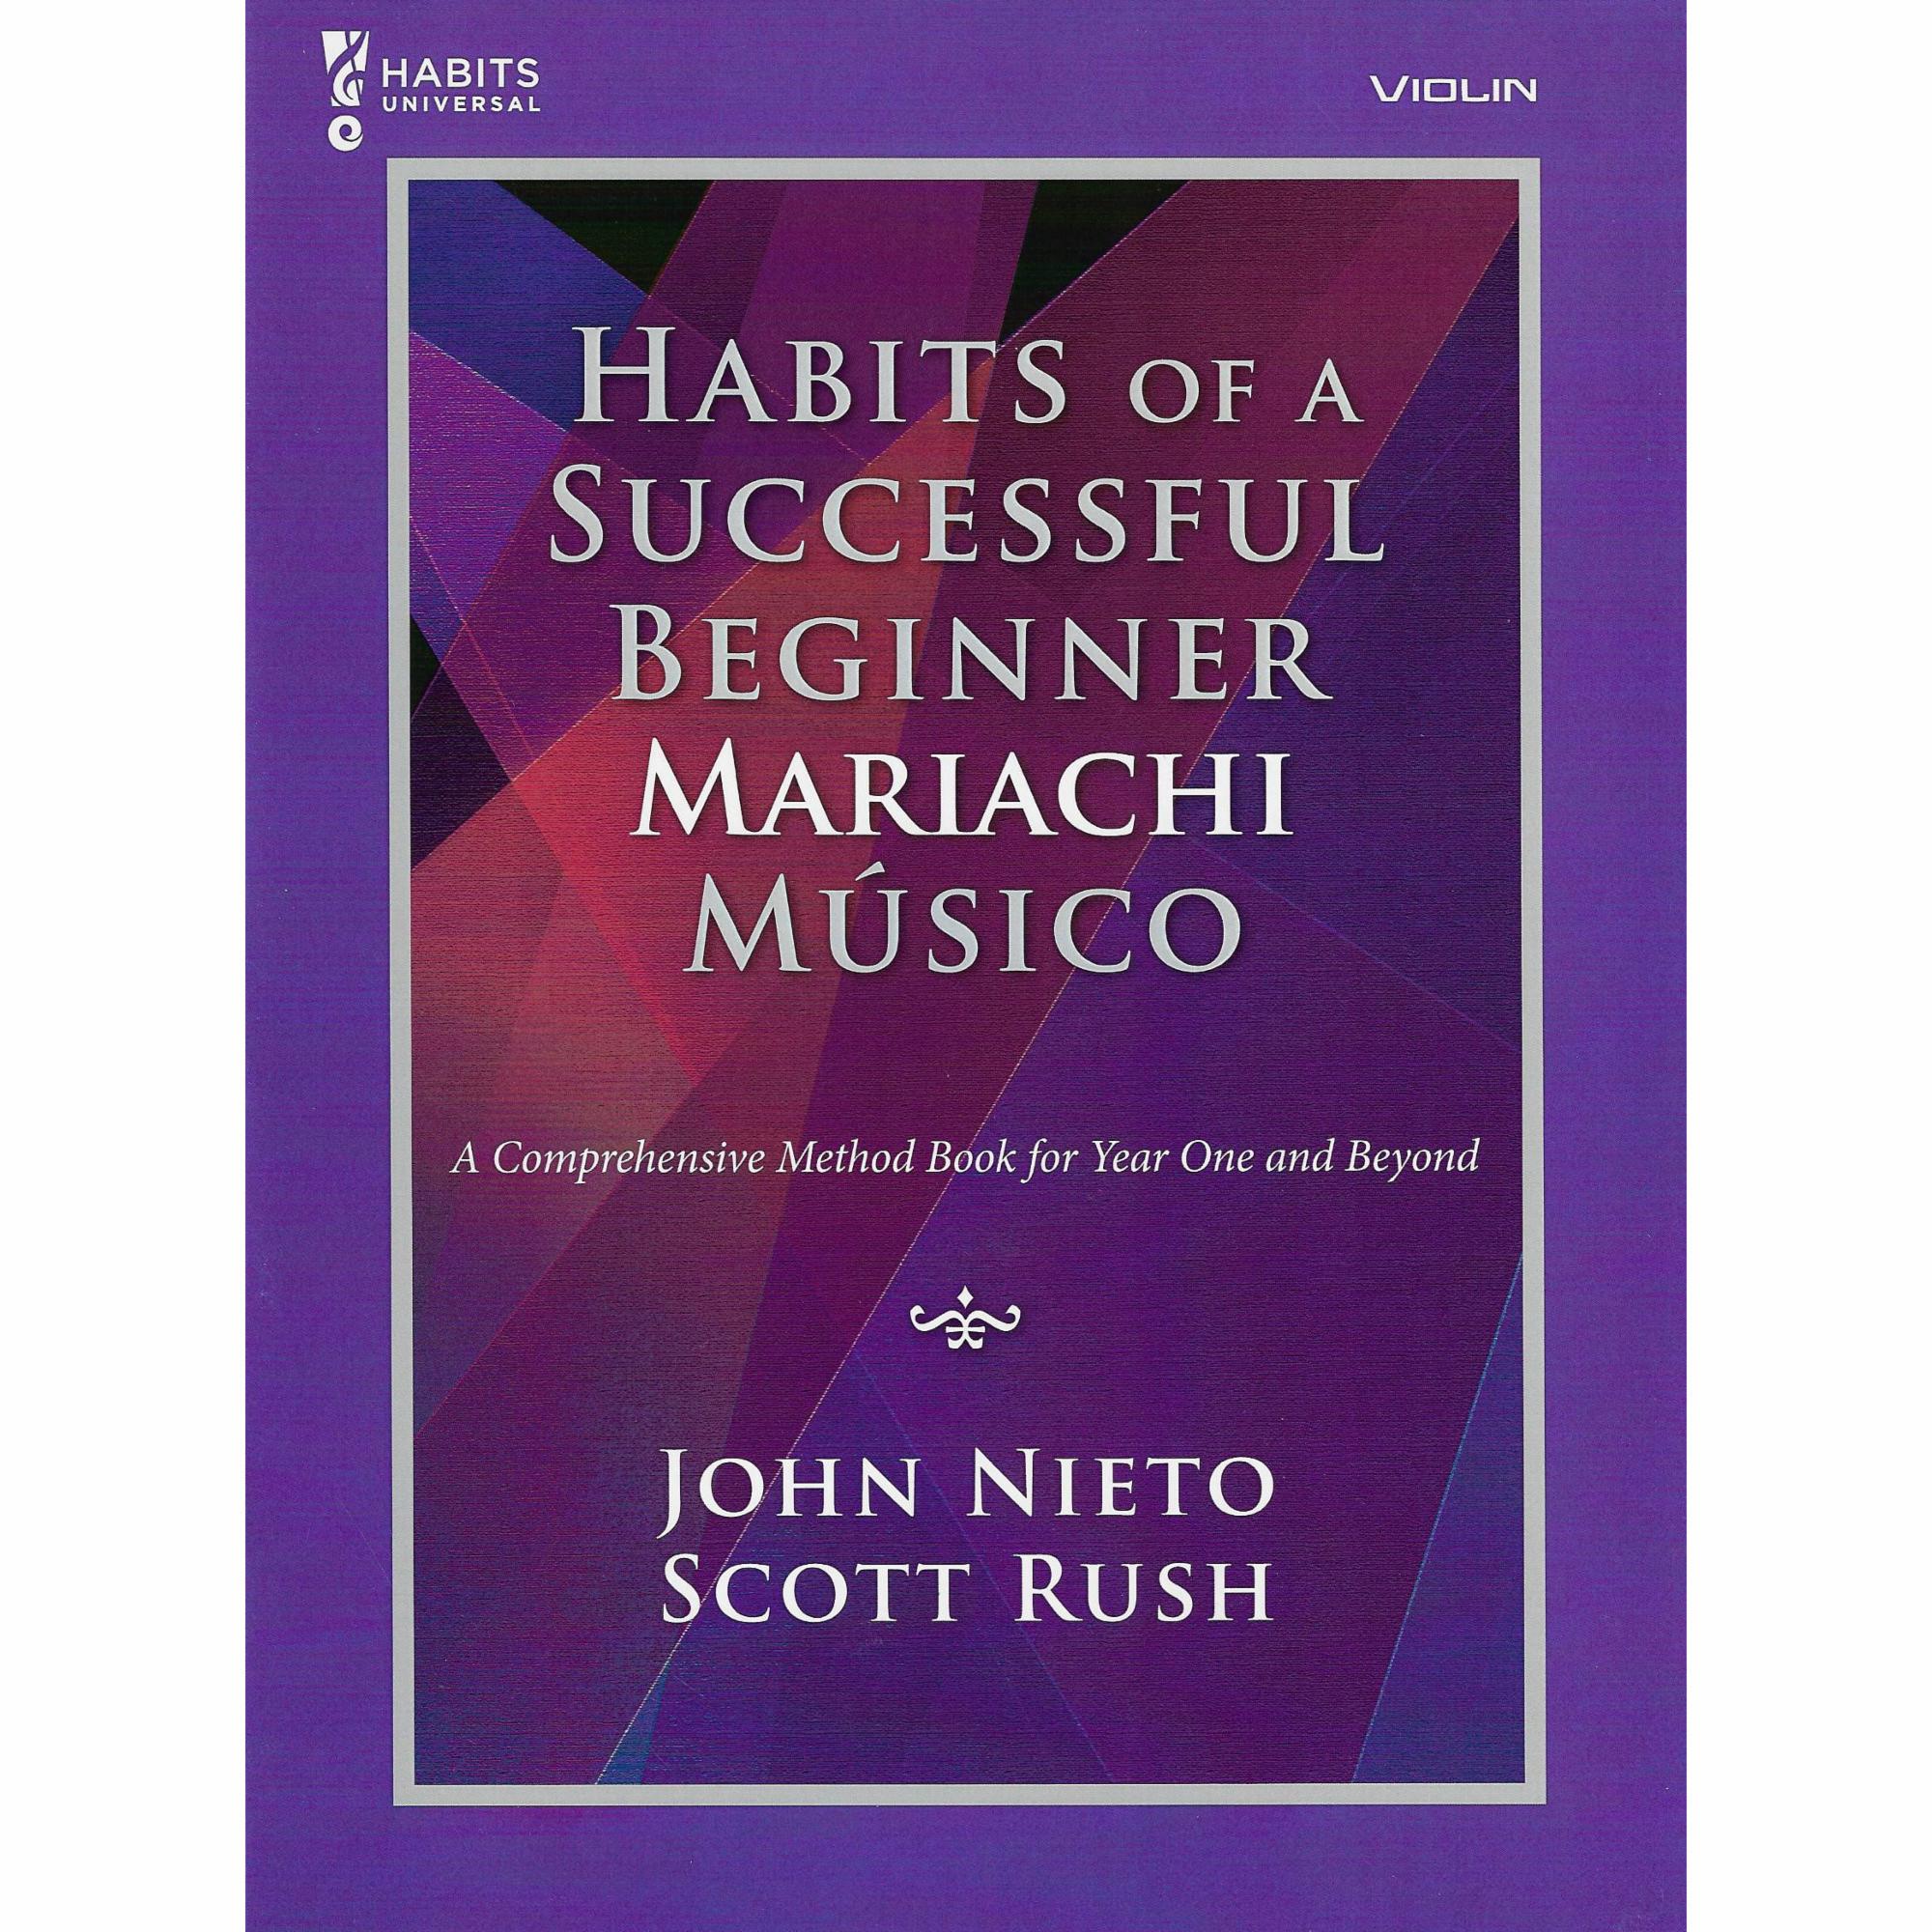 Habits of a Successful Beginner Mariachi Musico